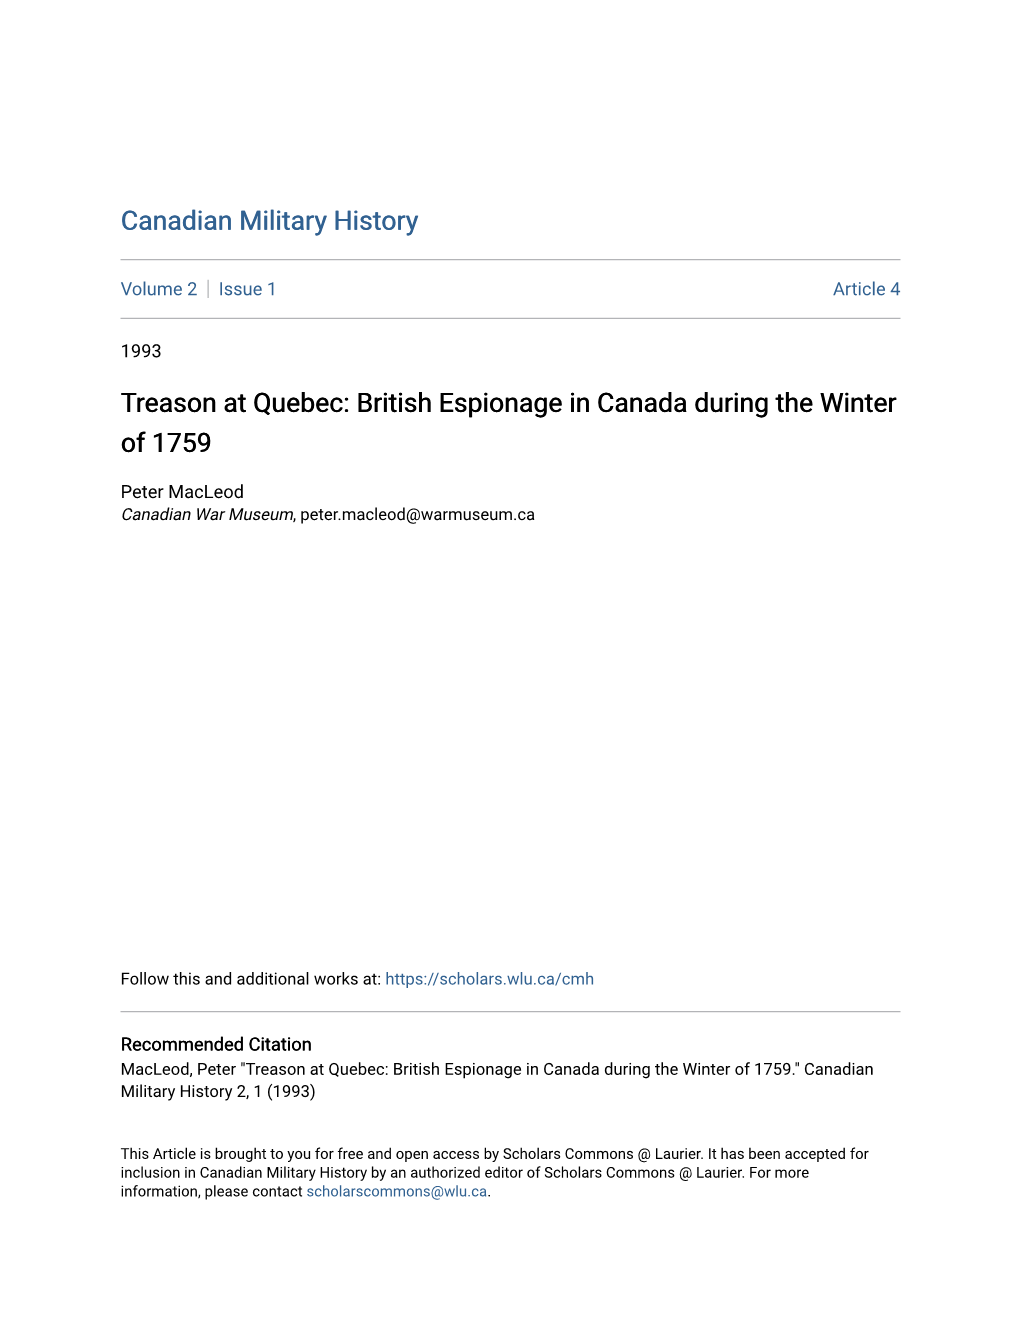 Treason at Quebec: British Espionage in Canada During the Winter of 1759